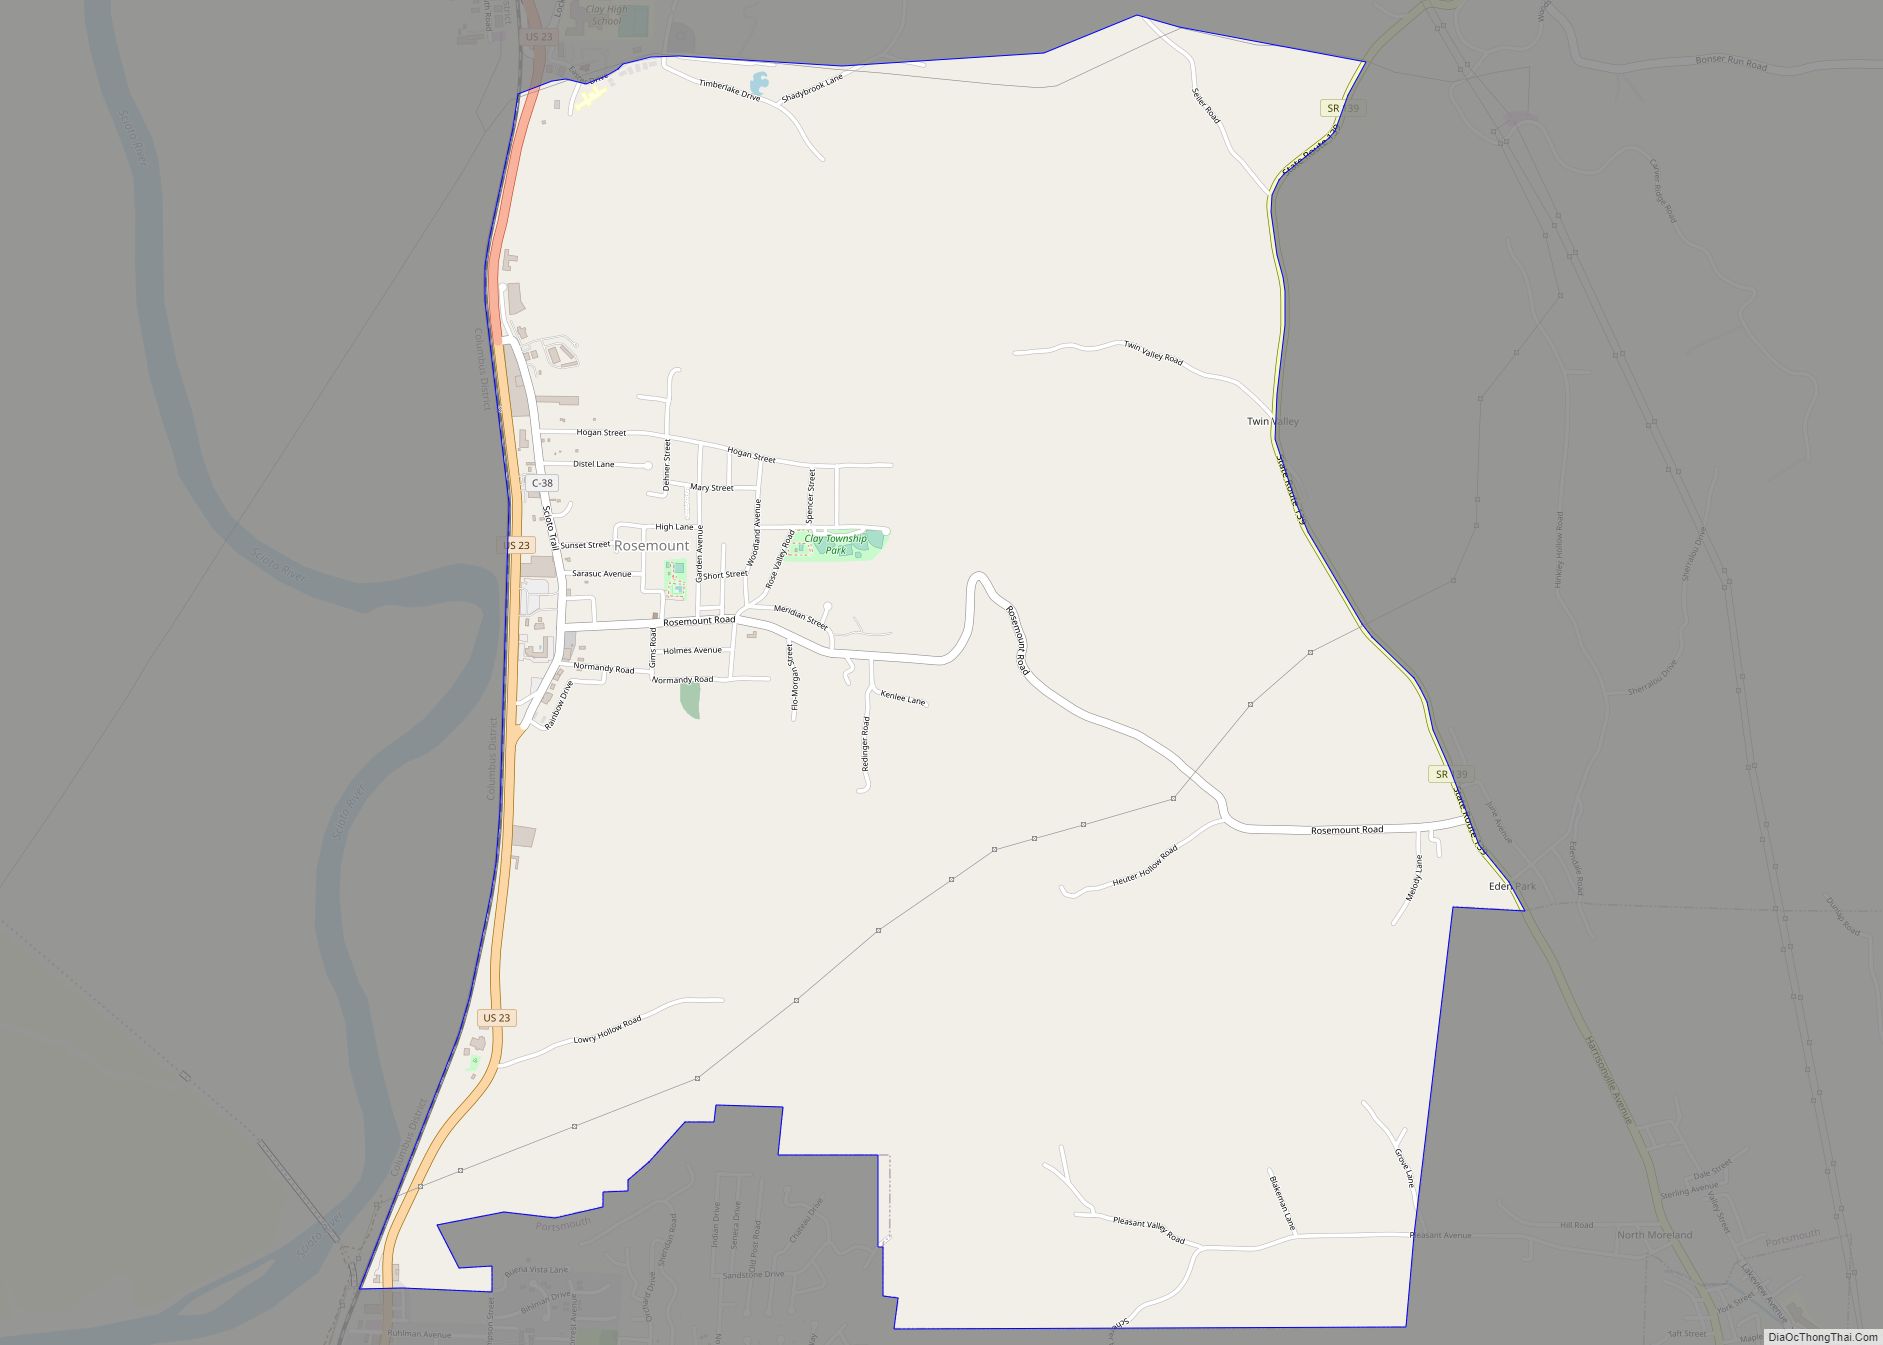 Map of Rosemount CDP, Ohio